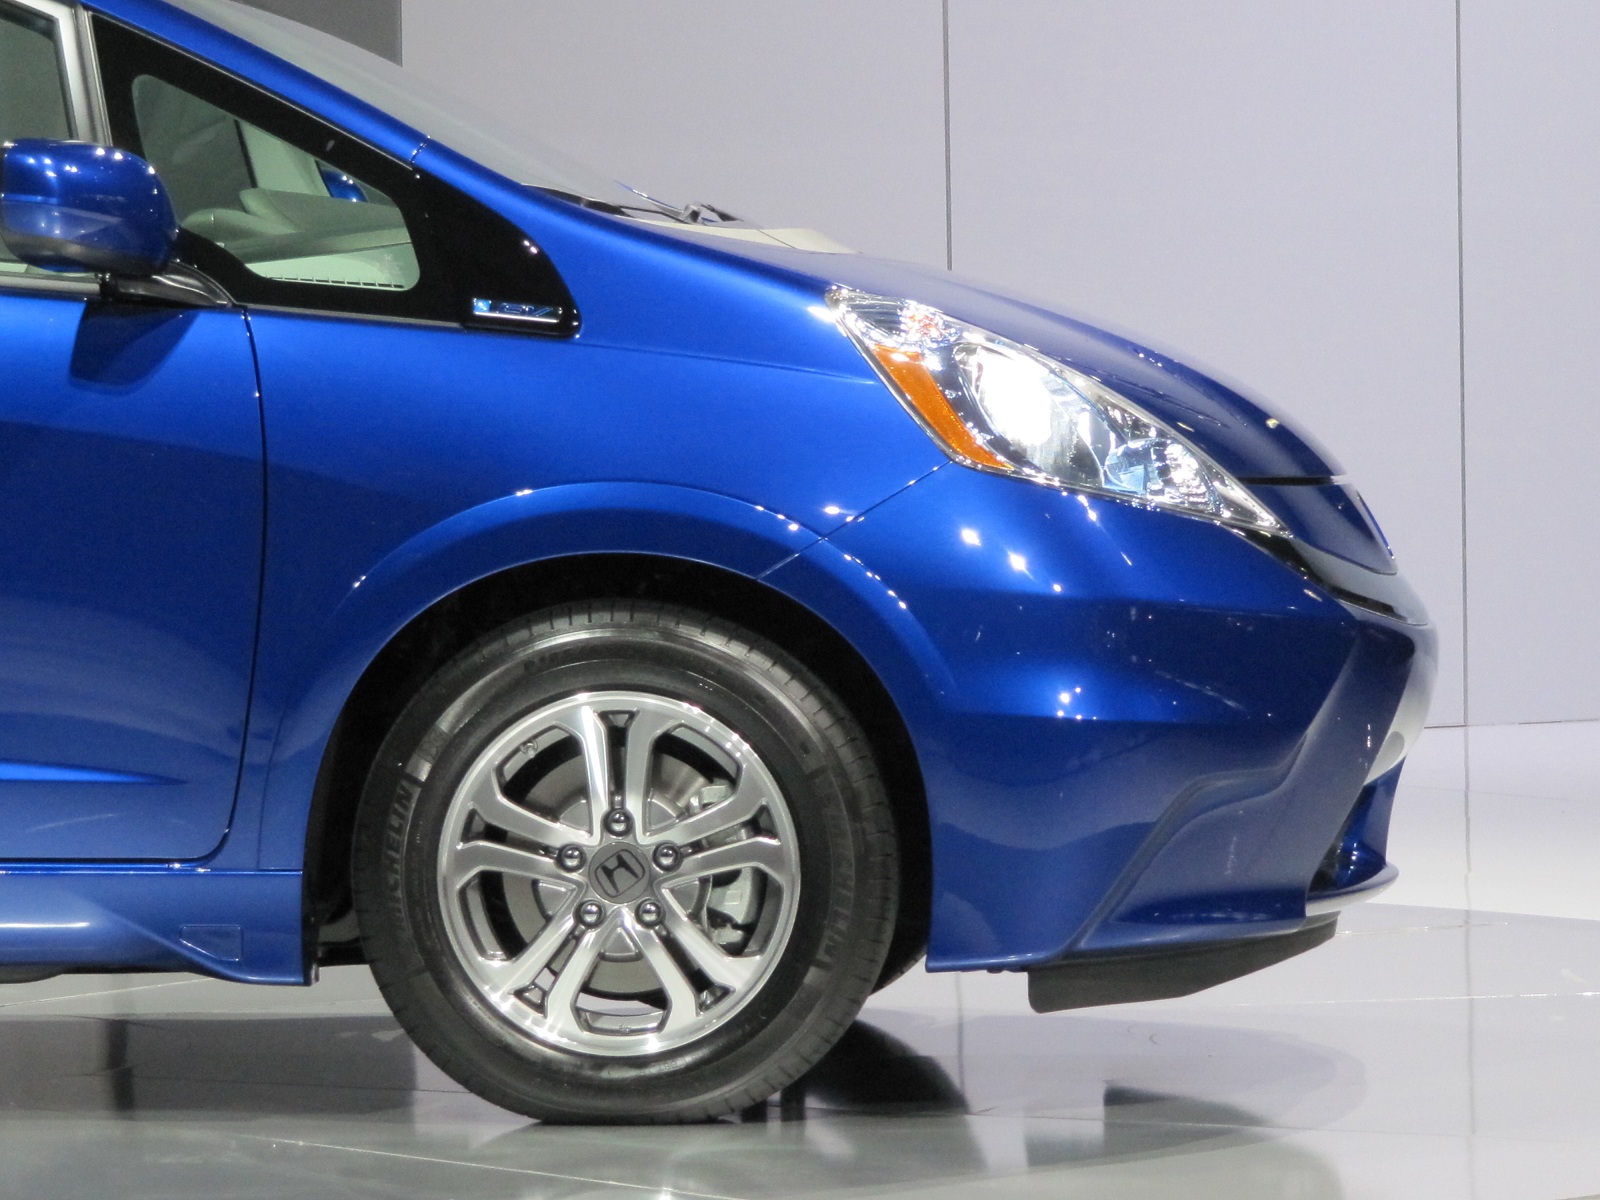 Electric Honda Fit EV Details, Live Photos From L.A. Auto Show